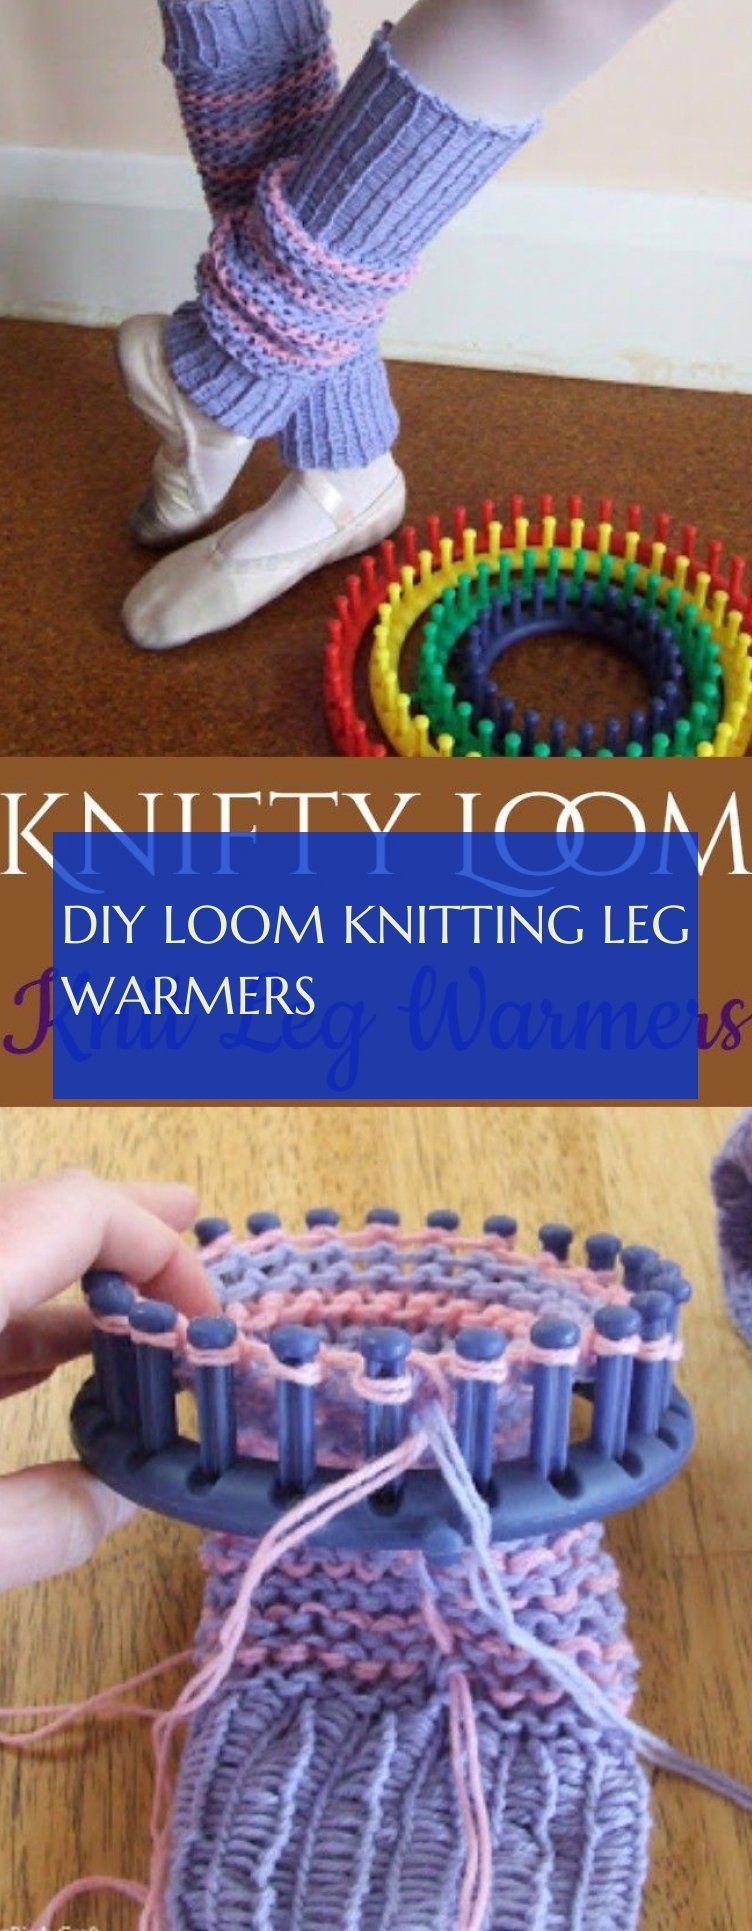 diy loom knitting leg warmers & diy webstuhl stricken beinlinge & #loom #knittin...